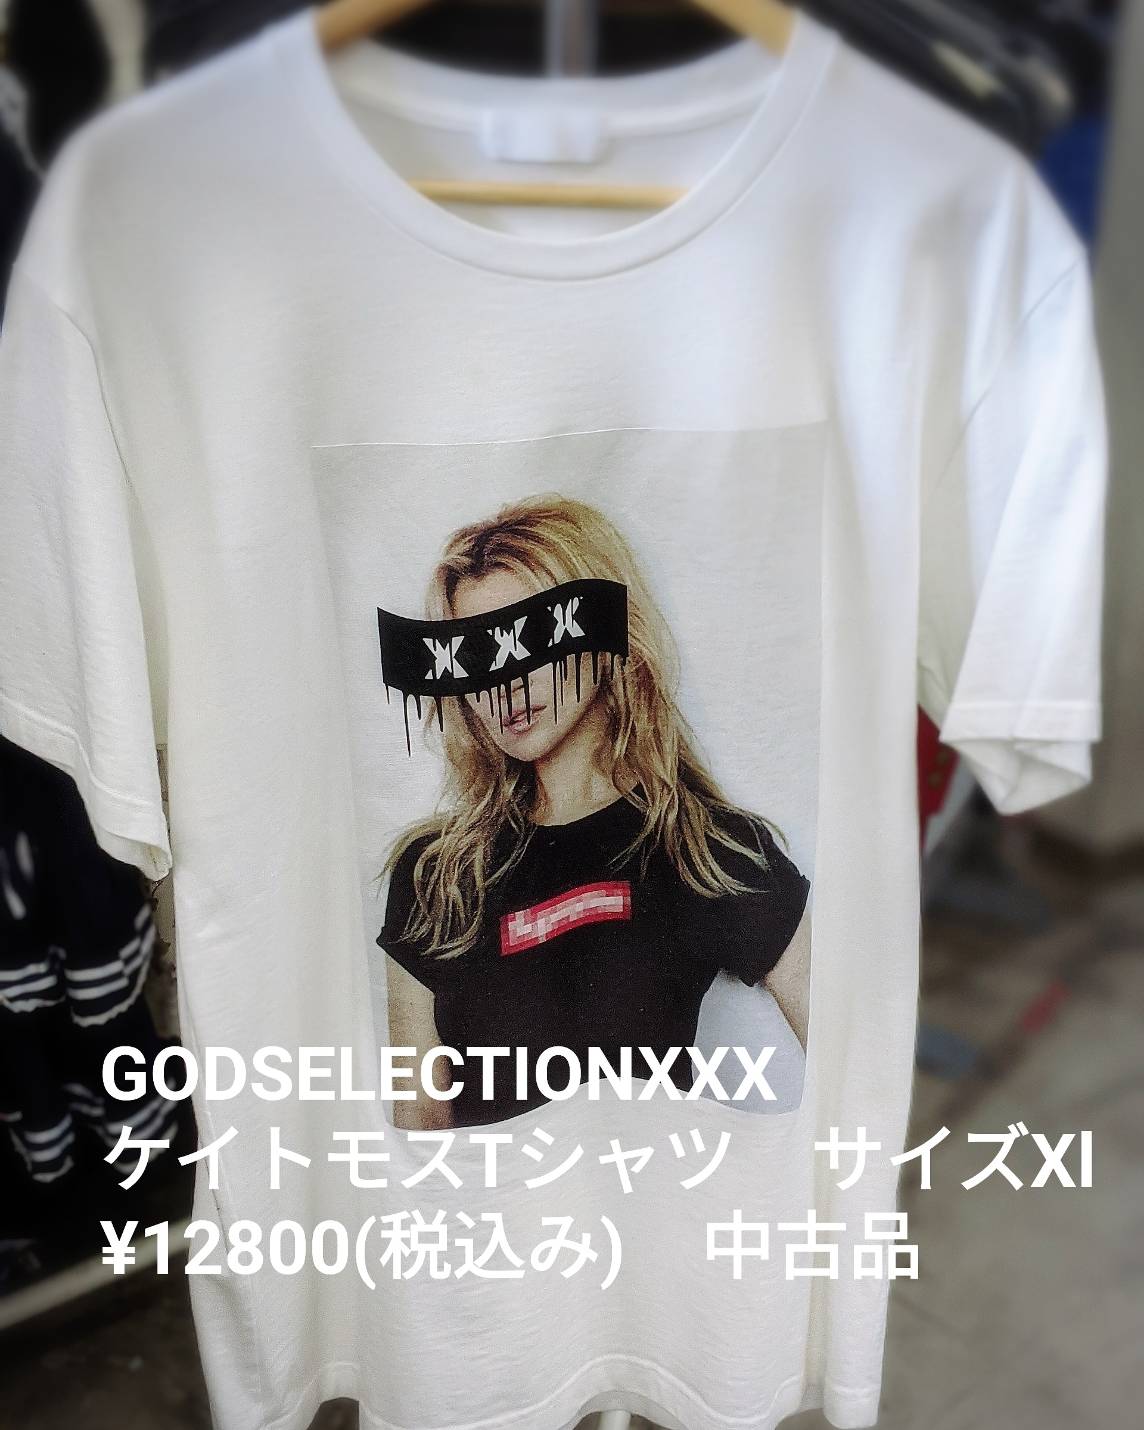 6/12☆GOD SELECTION xxx ケイトモスTシャツ 入荷しました！ #マンガ 